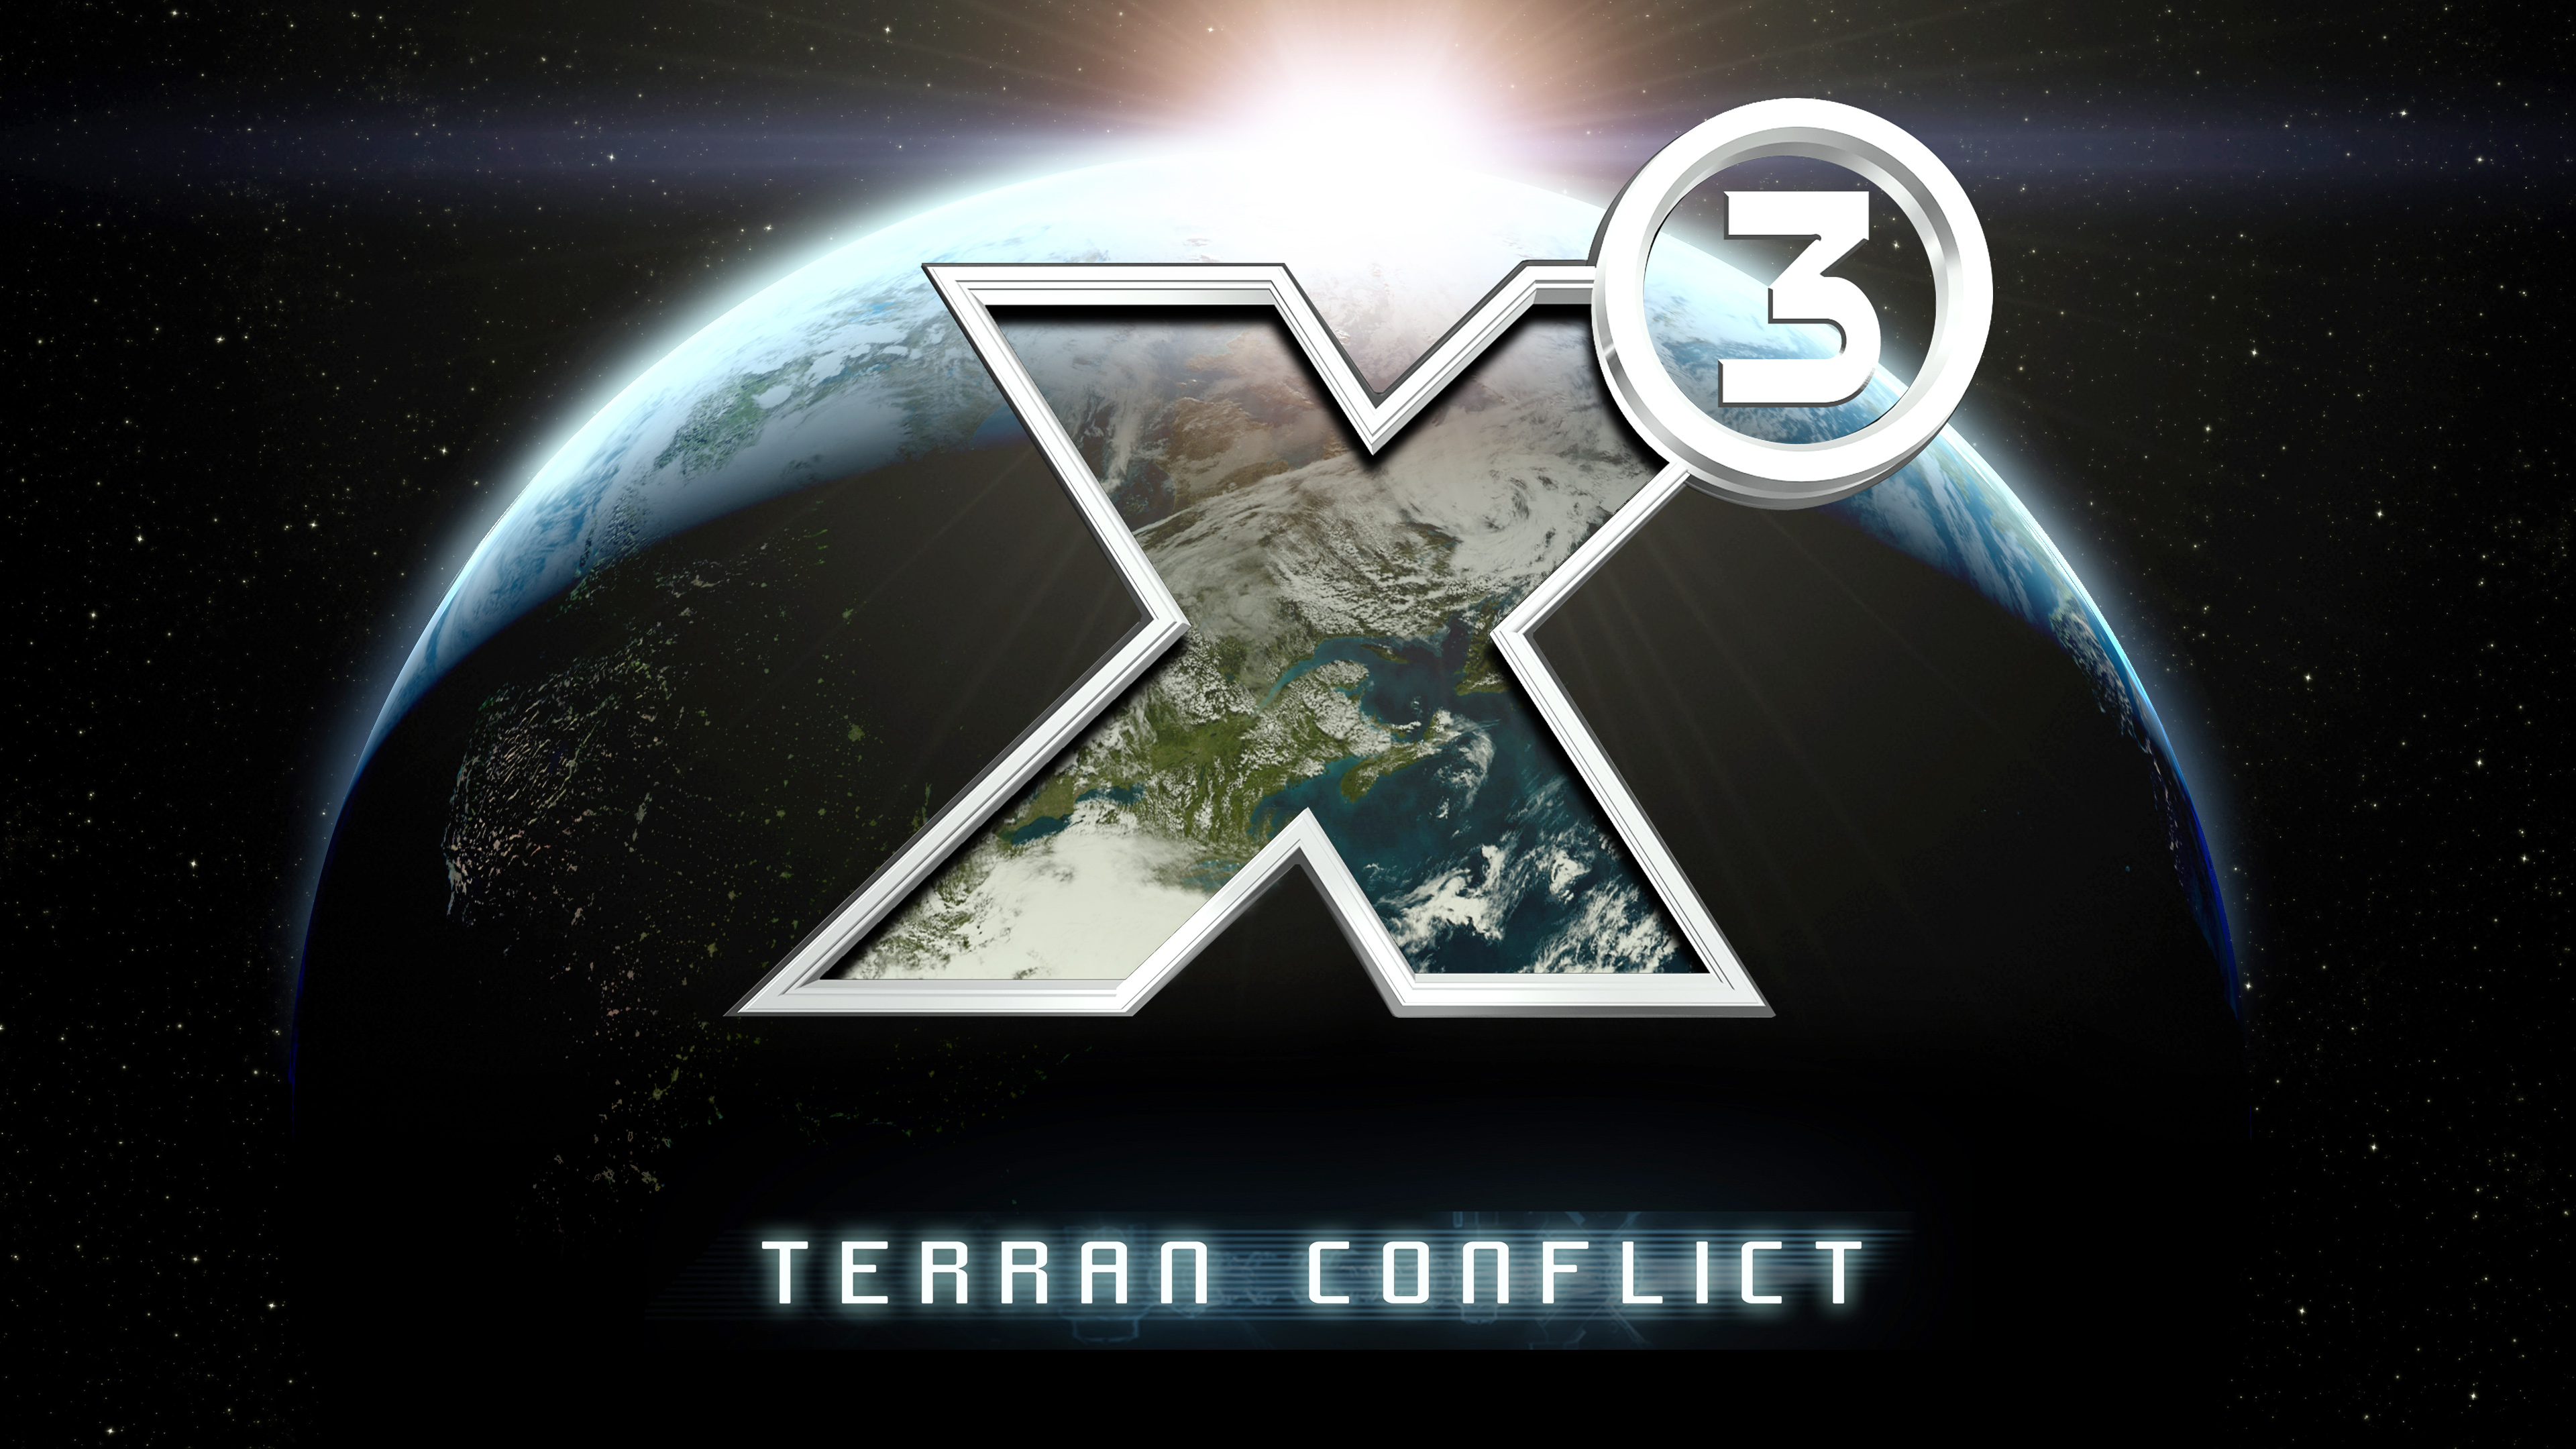 x3-terran-conflict-details-launchbox-games-database